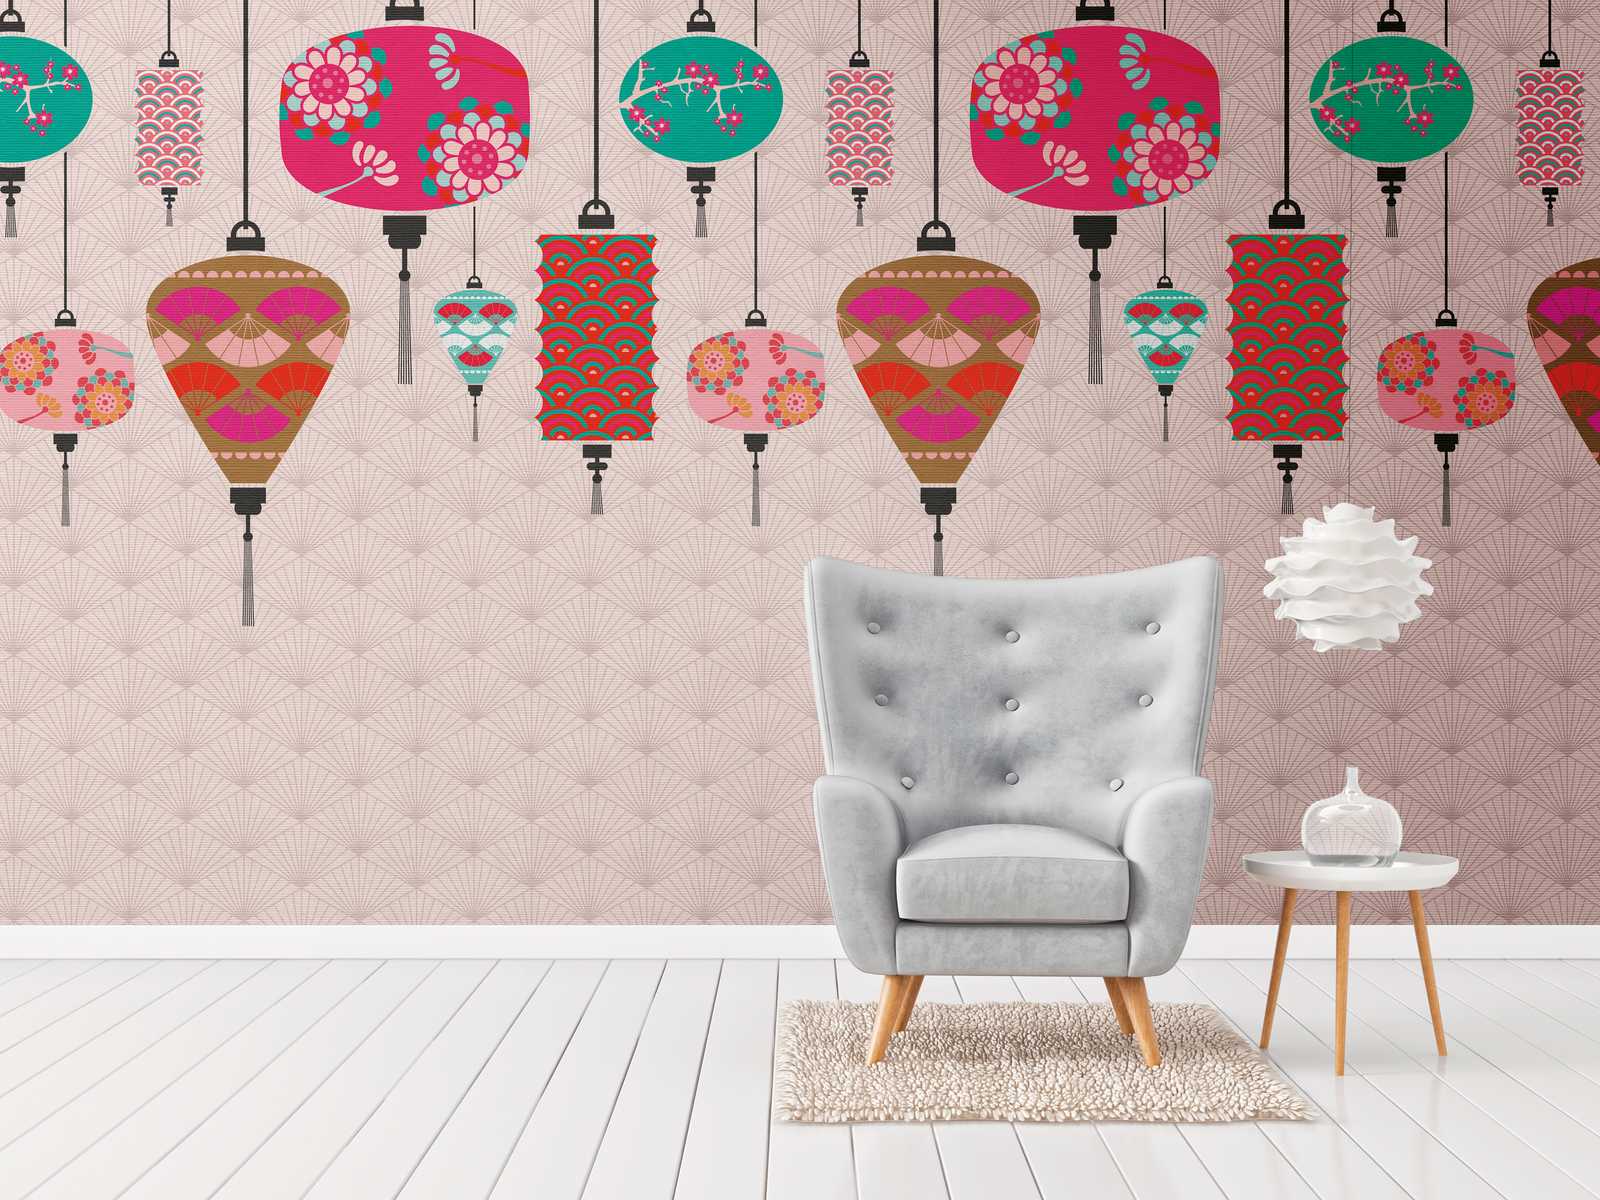             Wallpaper novelty | Asian motif wallpaper with colourful lanterns
        